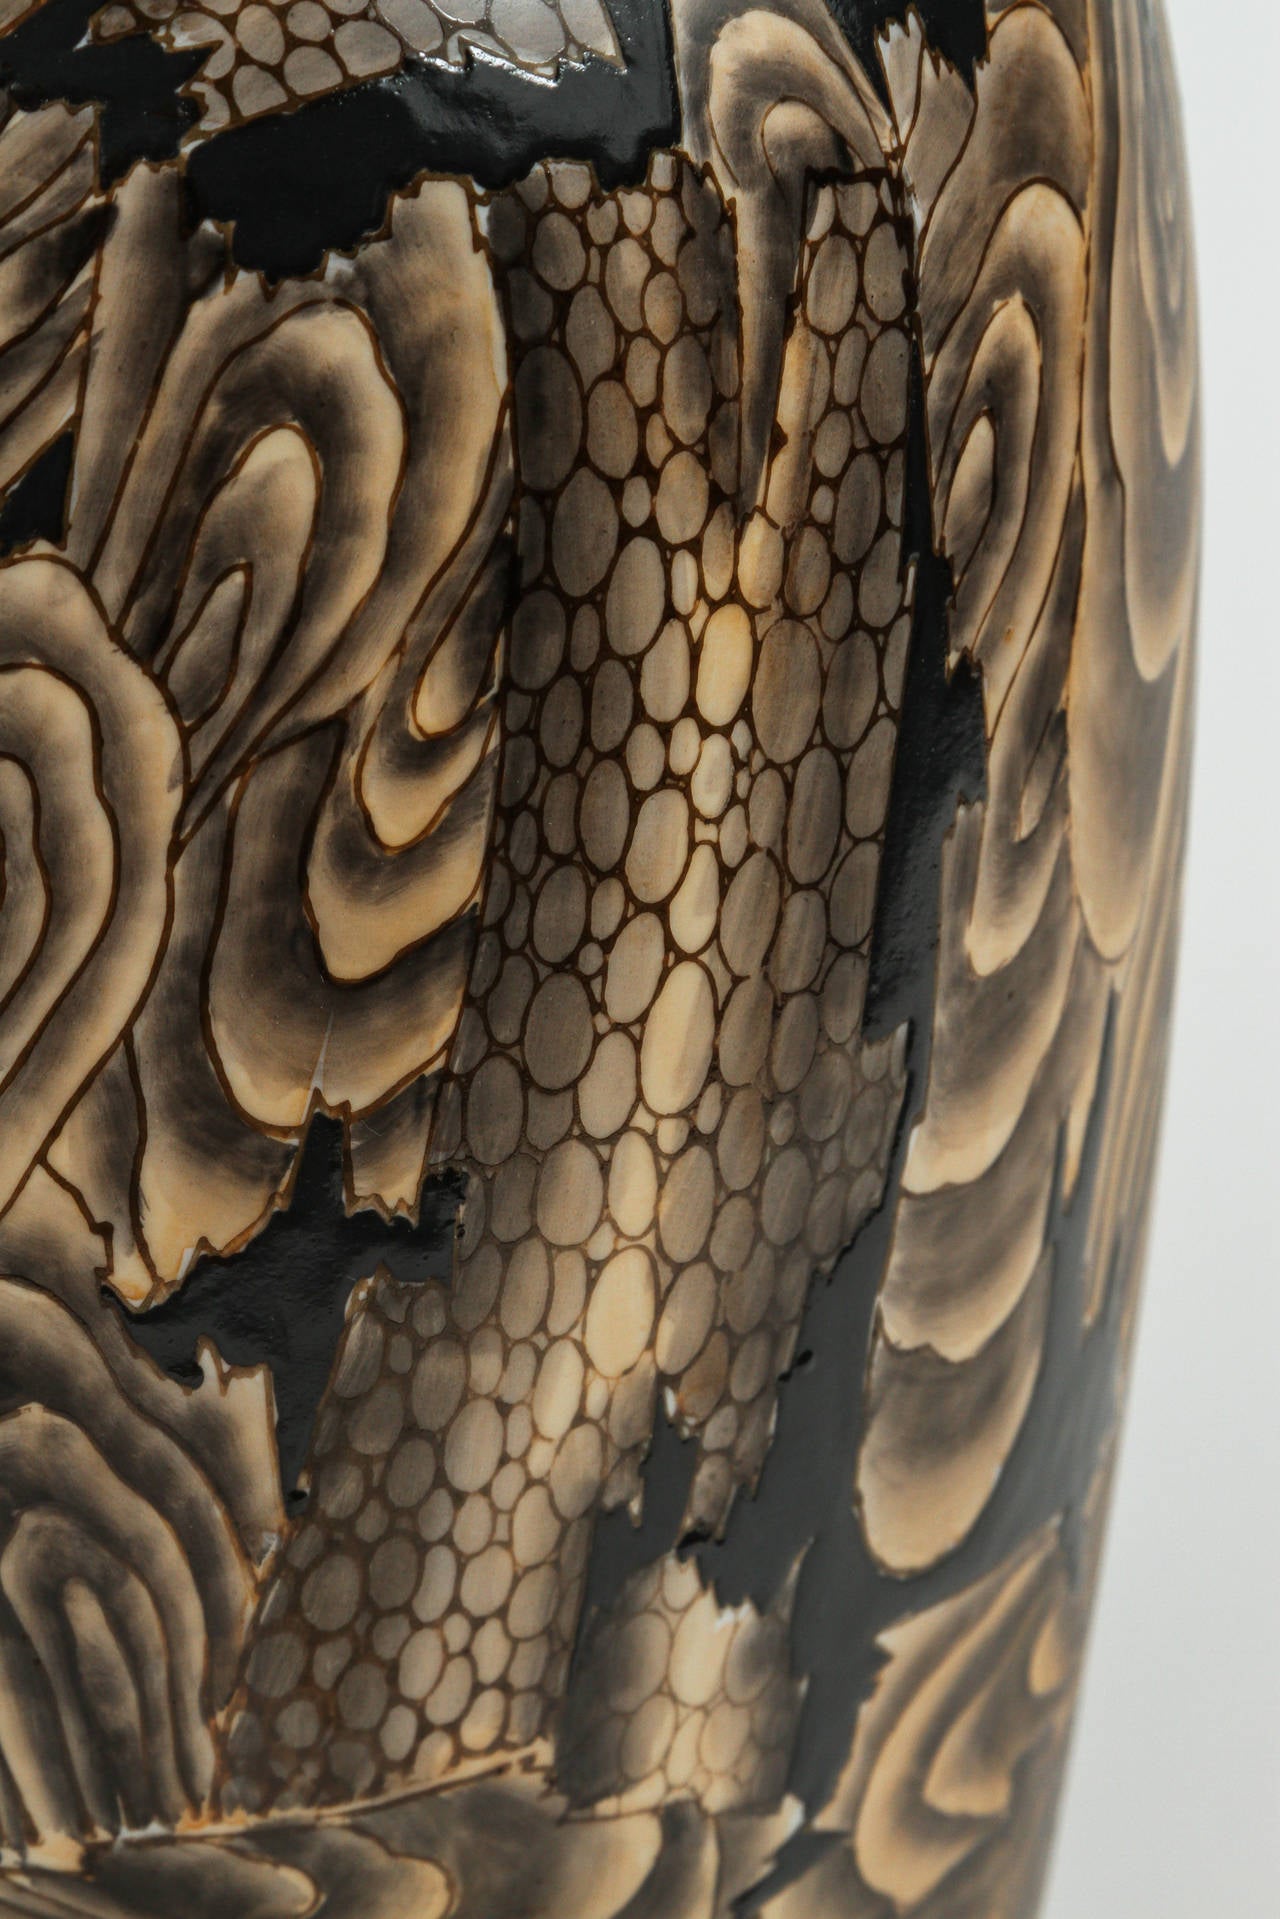 Japanese Glazed Ceramic Vase In Good Condition For Sale In Palm Desert, CA